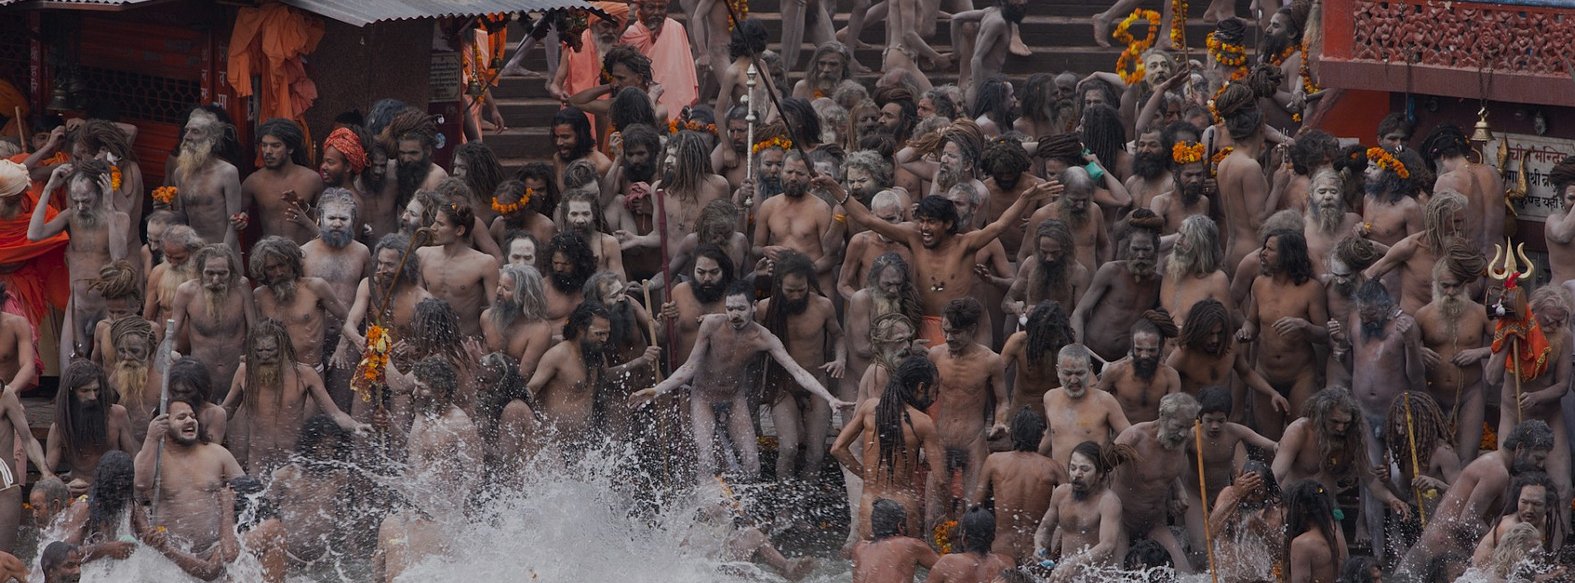 Bathing at Kumbh Mela